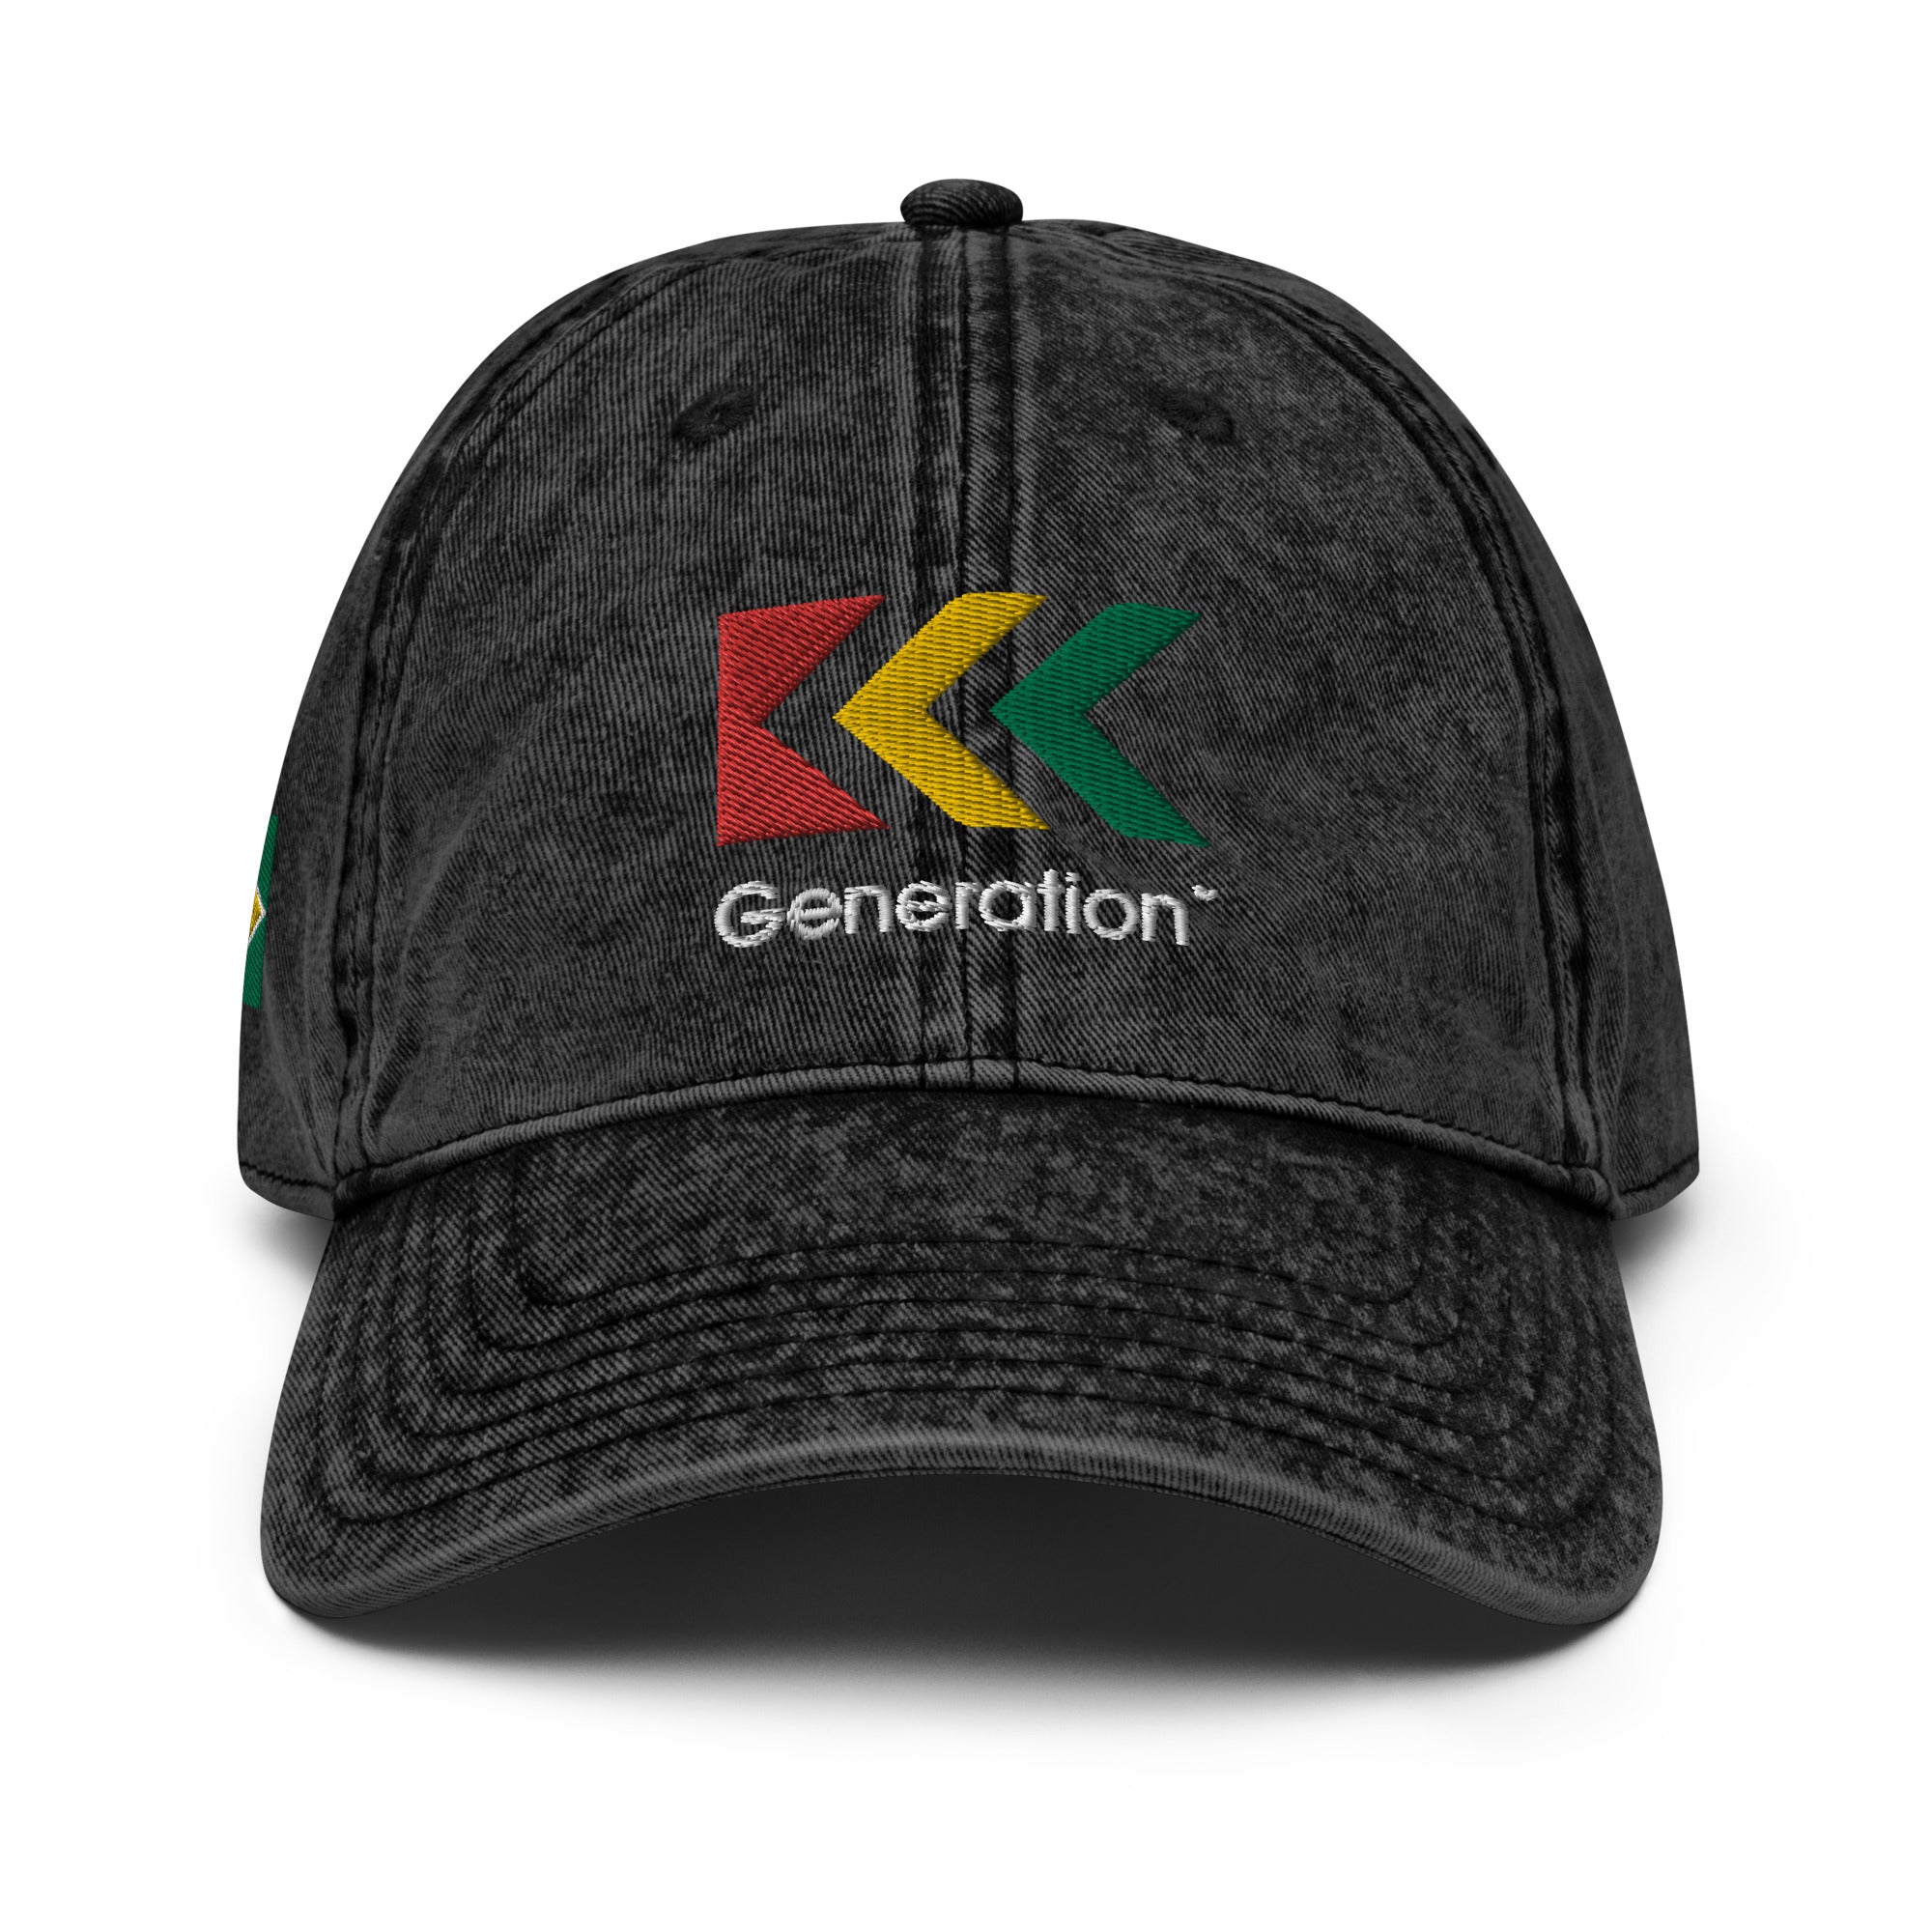 🇬🇾 Guyana KKKG Vintage Cotton Twill Cap